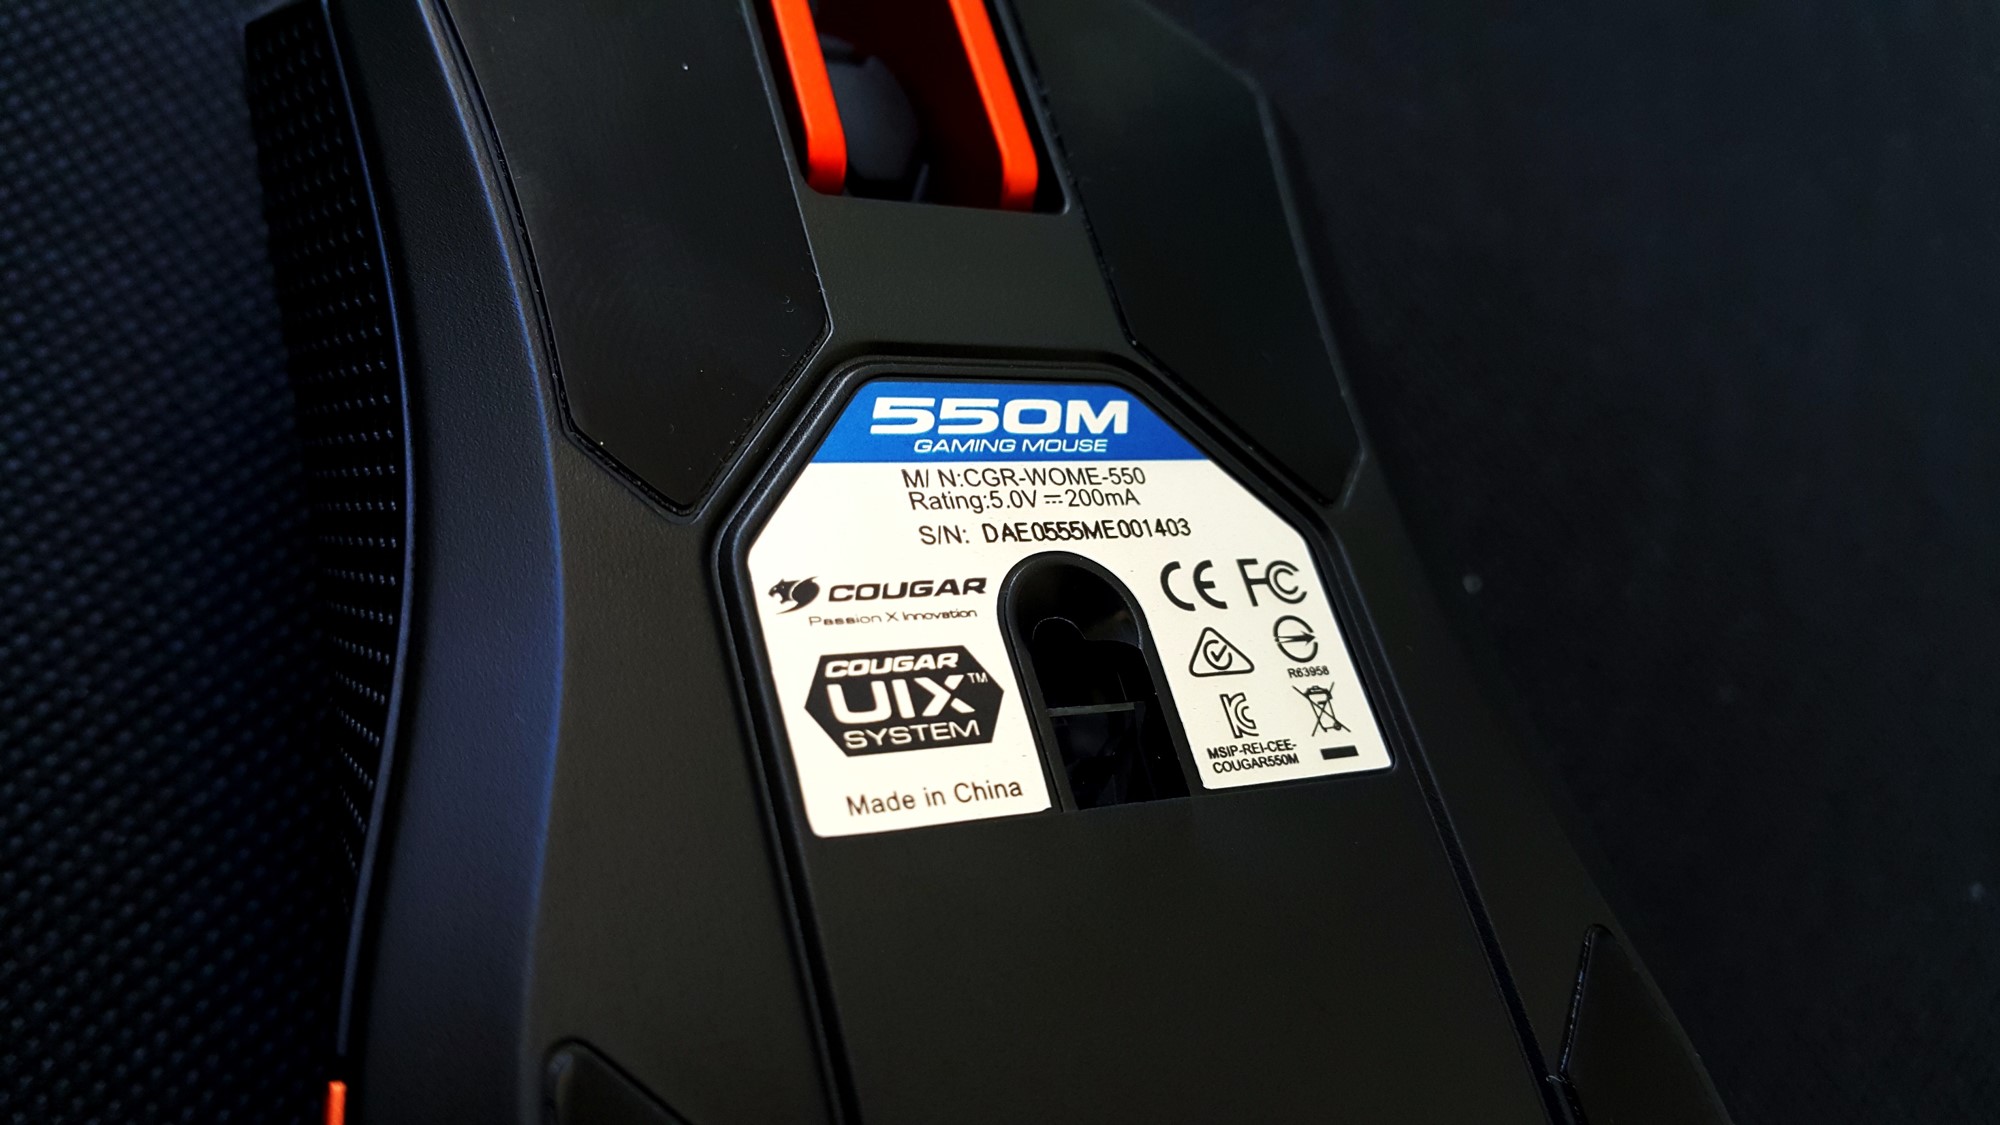 Couger 550M Gaming Mouse SDNS-3988 Optical gaming sensor